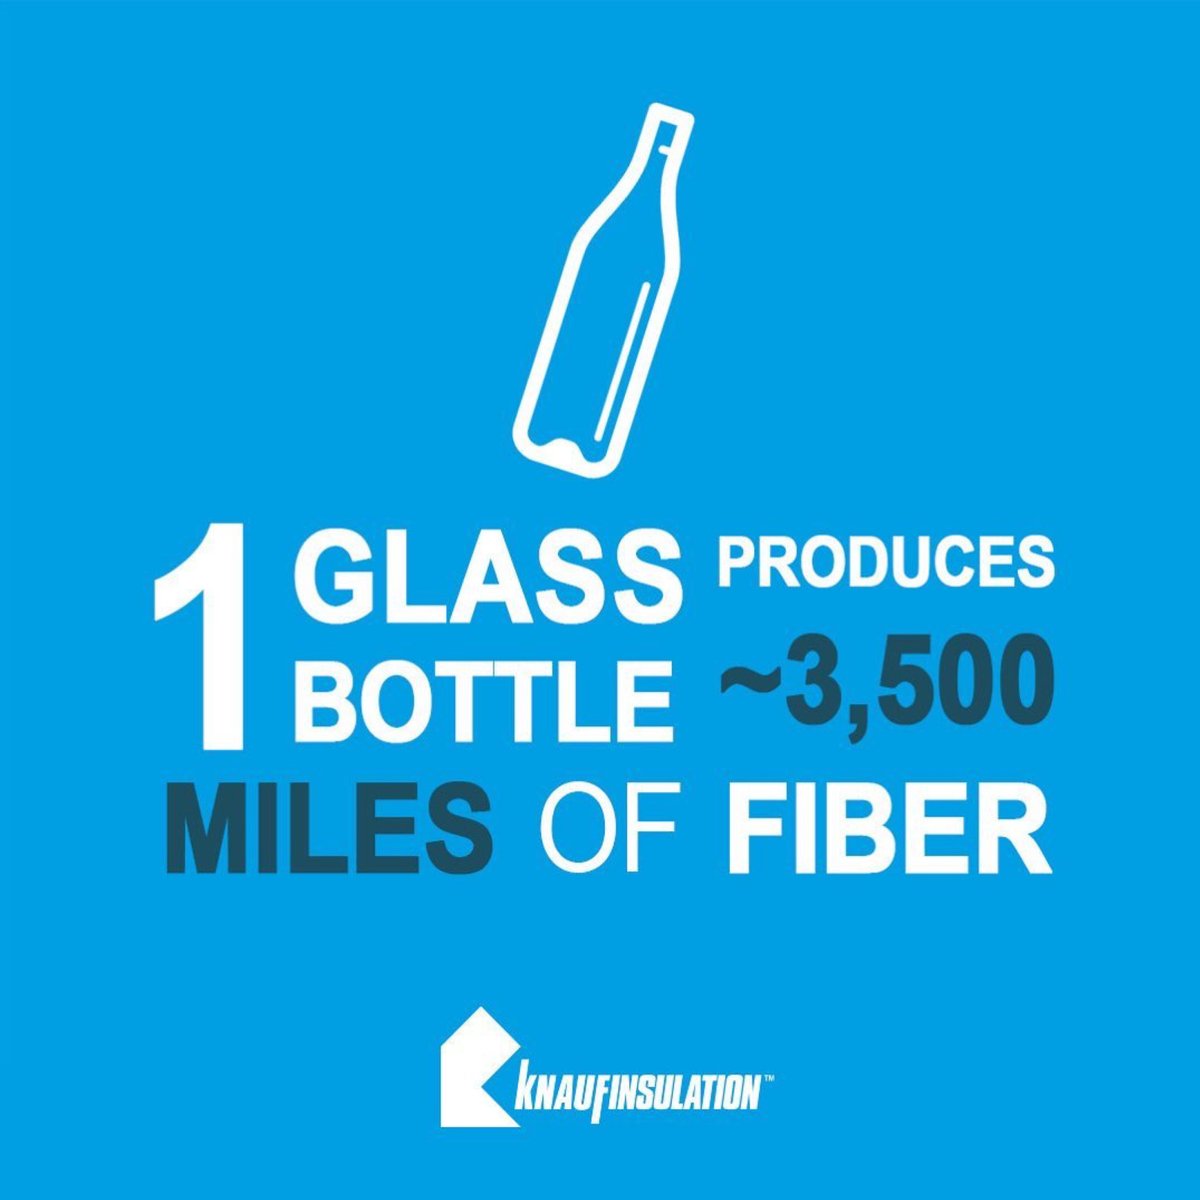 #DYK recycling one glass bottle produces about 3,500 miles of fiber?  @KnaufNA 

#chooseglass #planetoverplastic #fiberglass